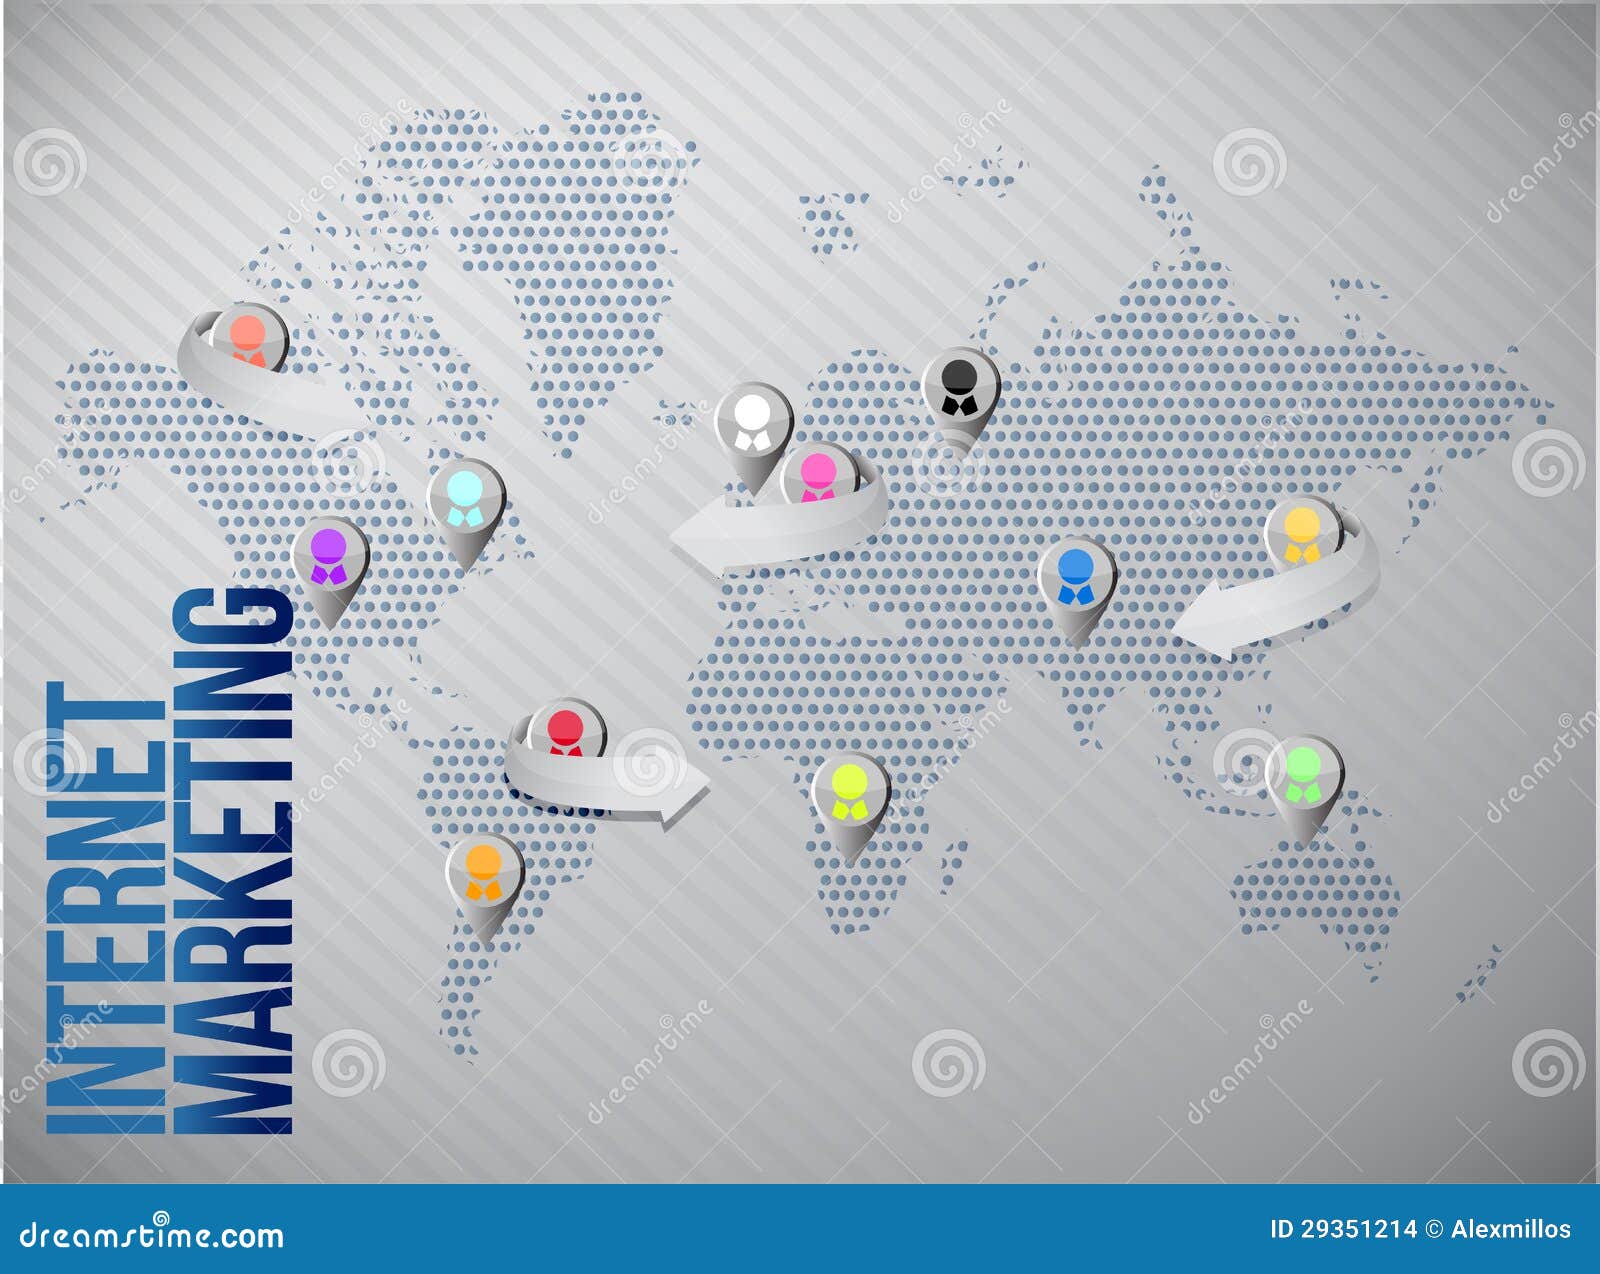 Internet Marketing Global Network Stock Images - Image: 29351214